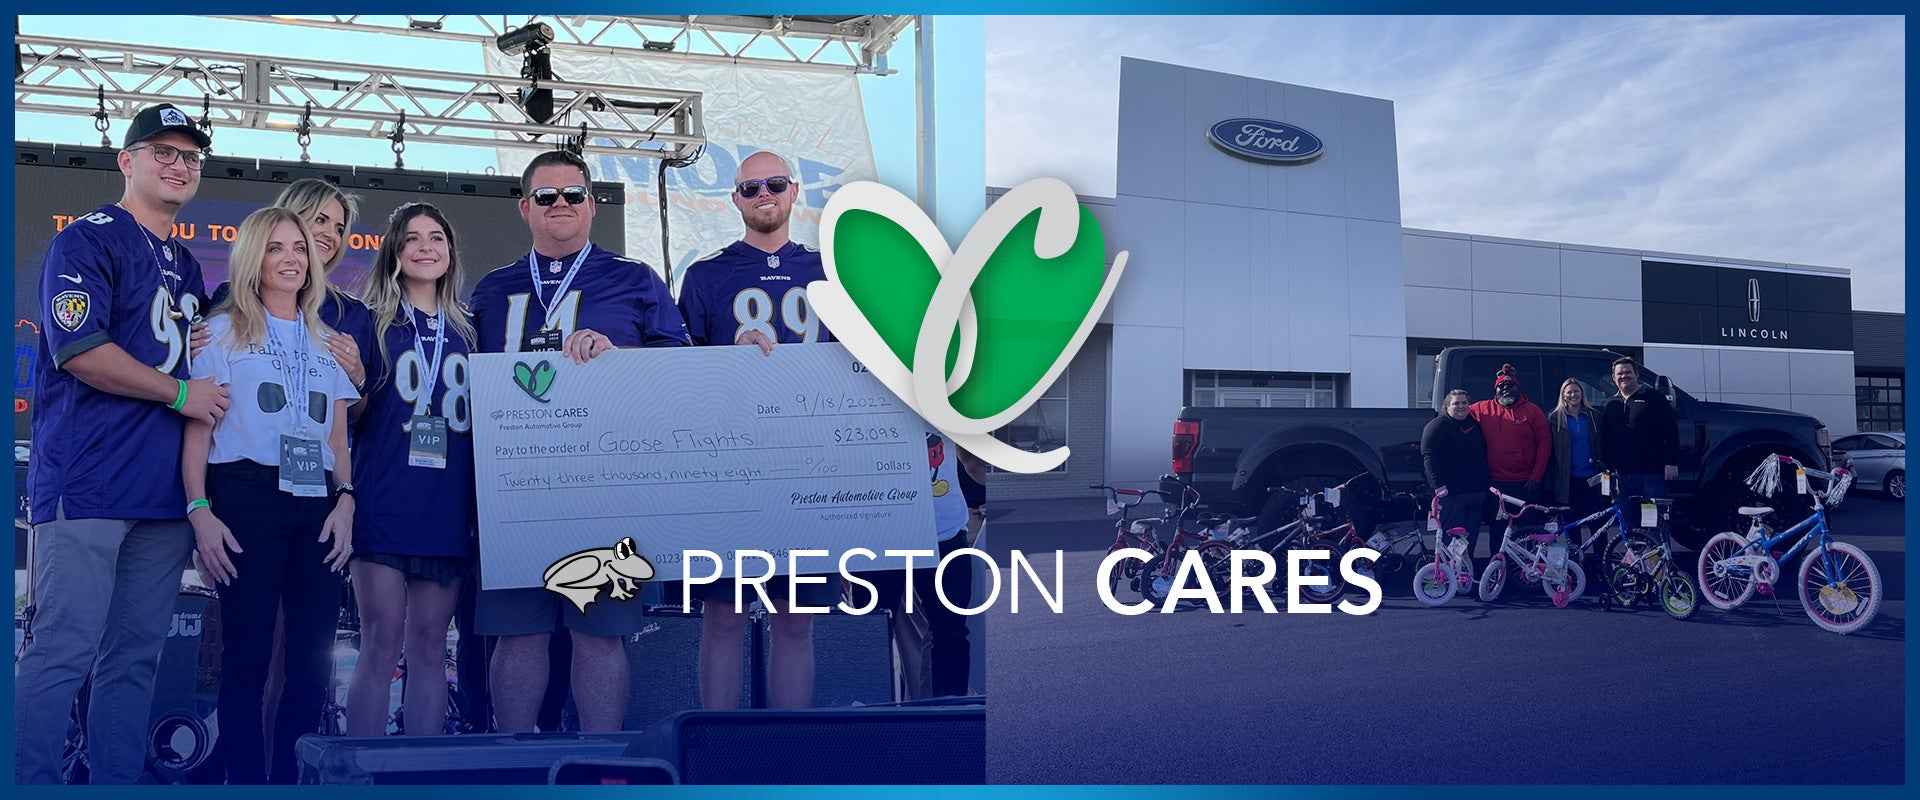 Preston Cares Community Outreach Keller VA